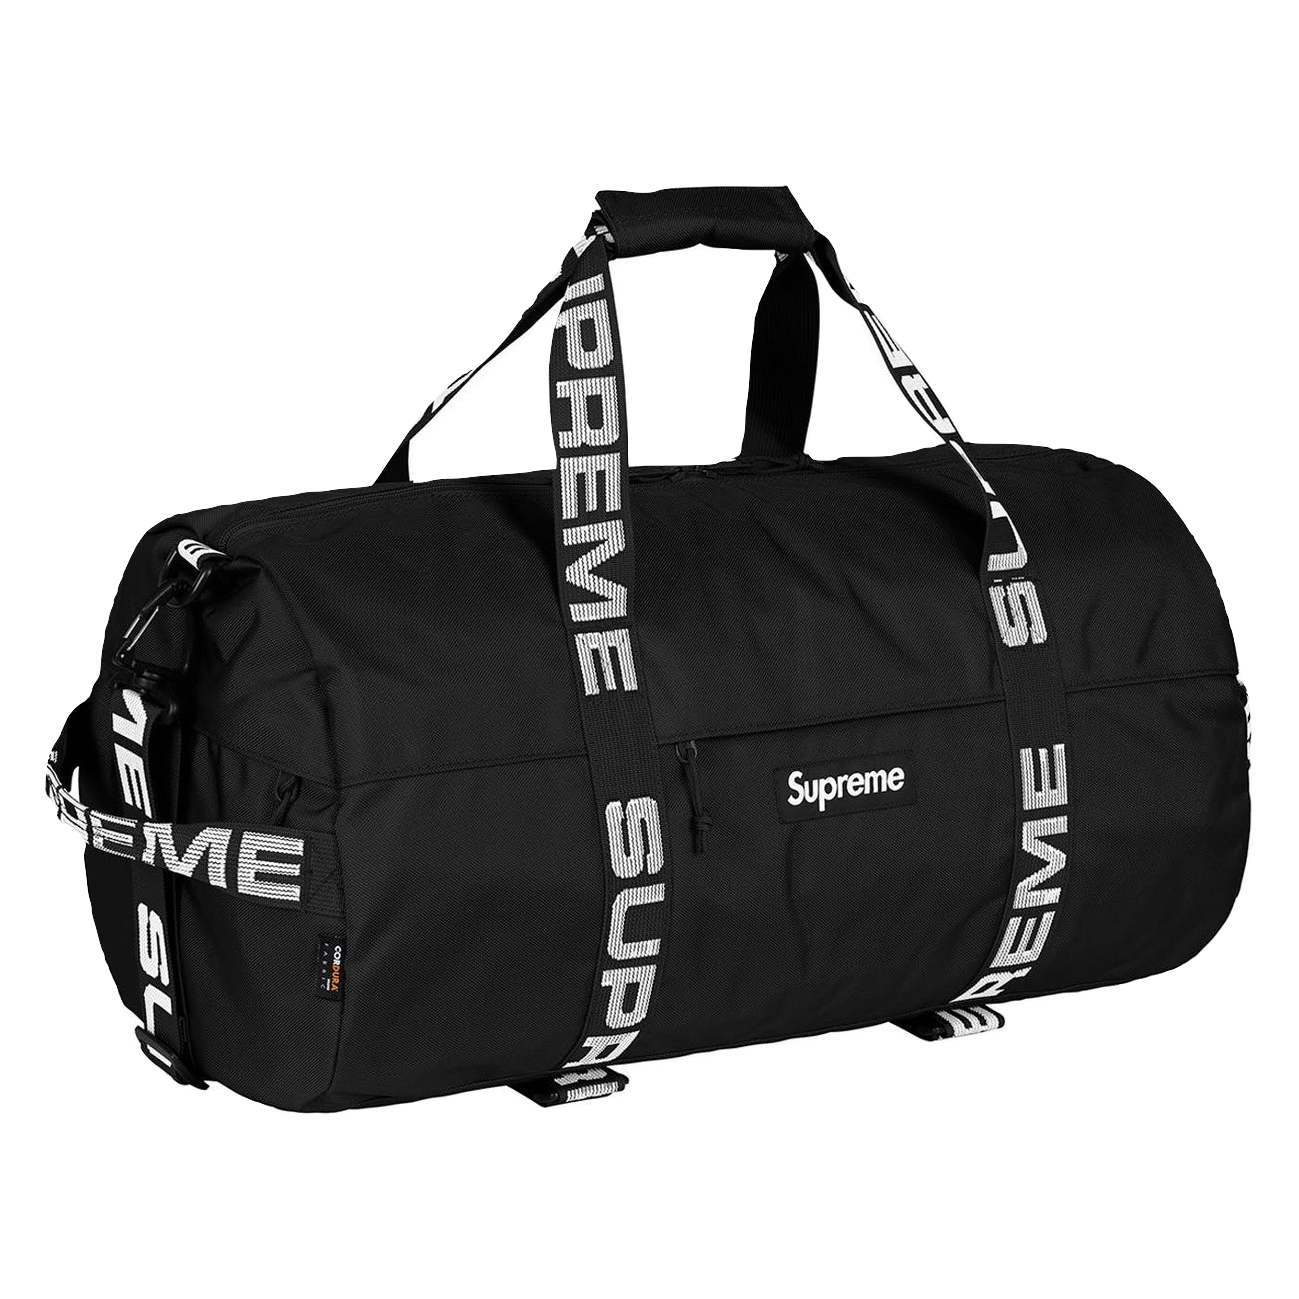 Supreme Duffle Bag SS18 - Black - Used